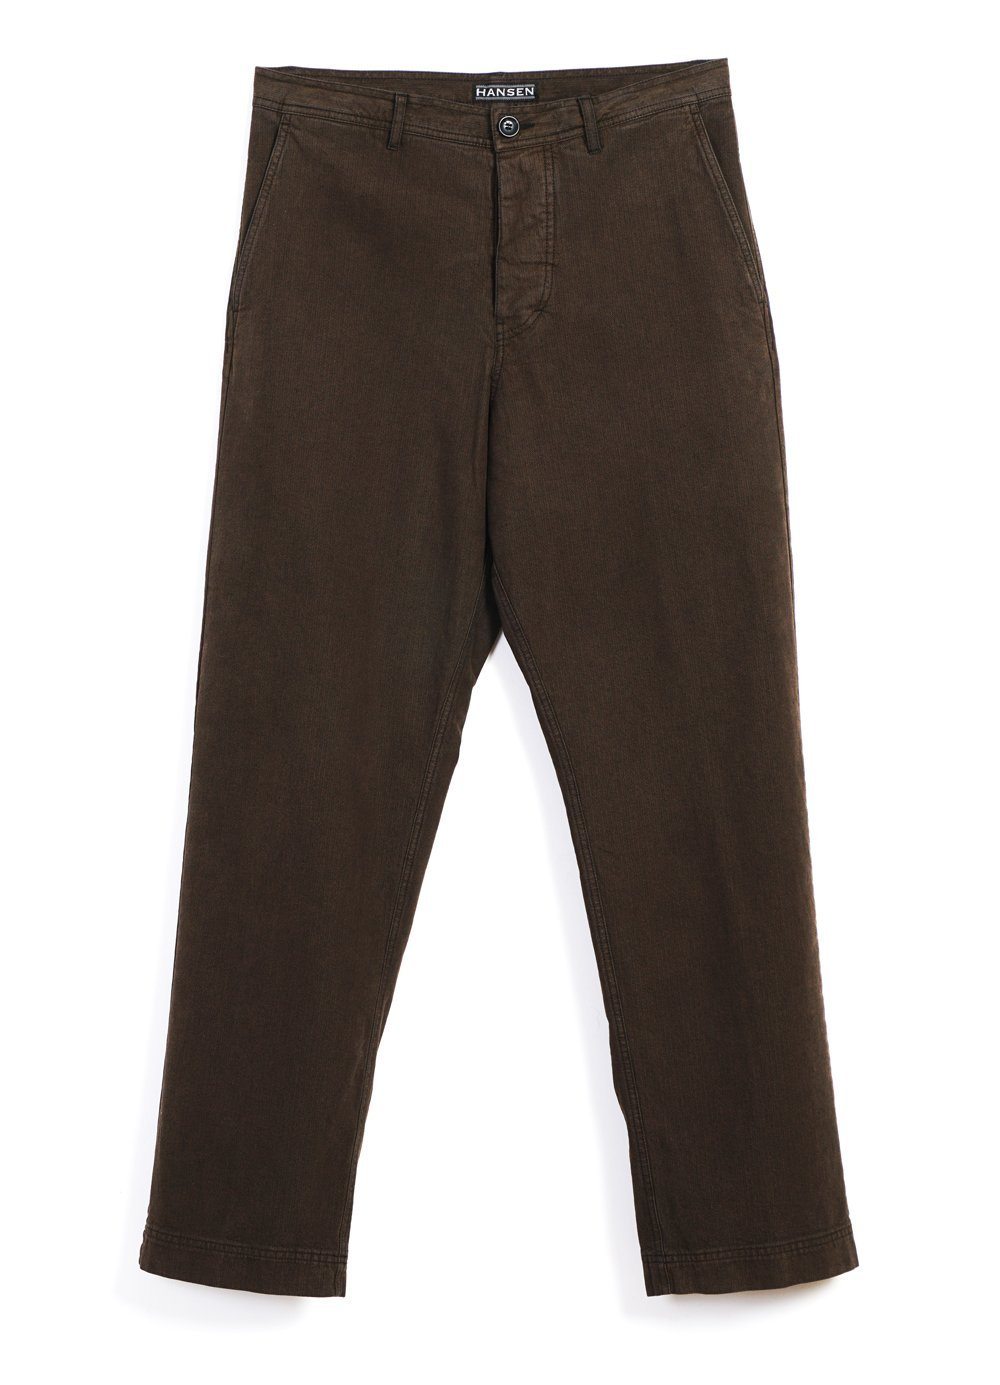 KEN | Wide Cut Trousers | Nut -HANSEN Garments- HANSEN Garments